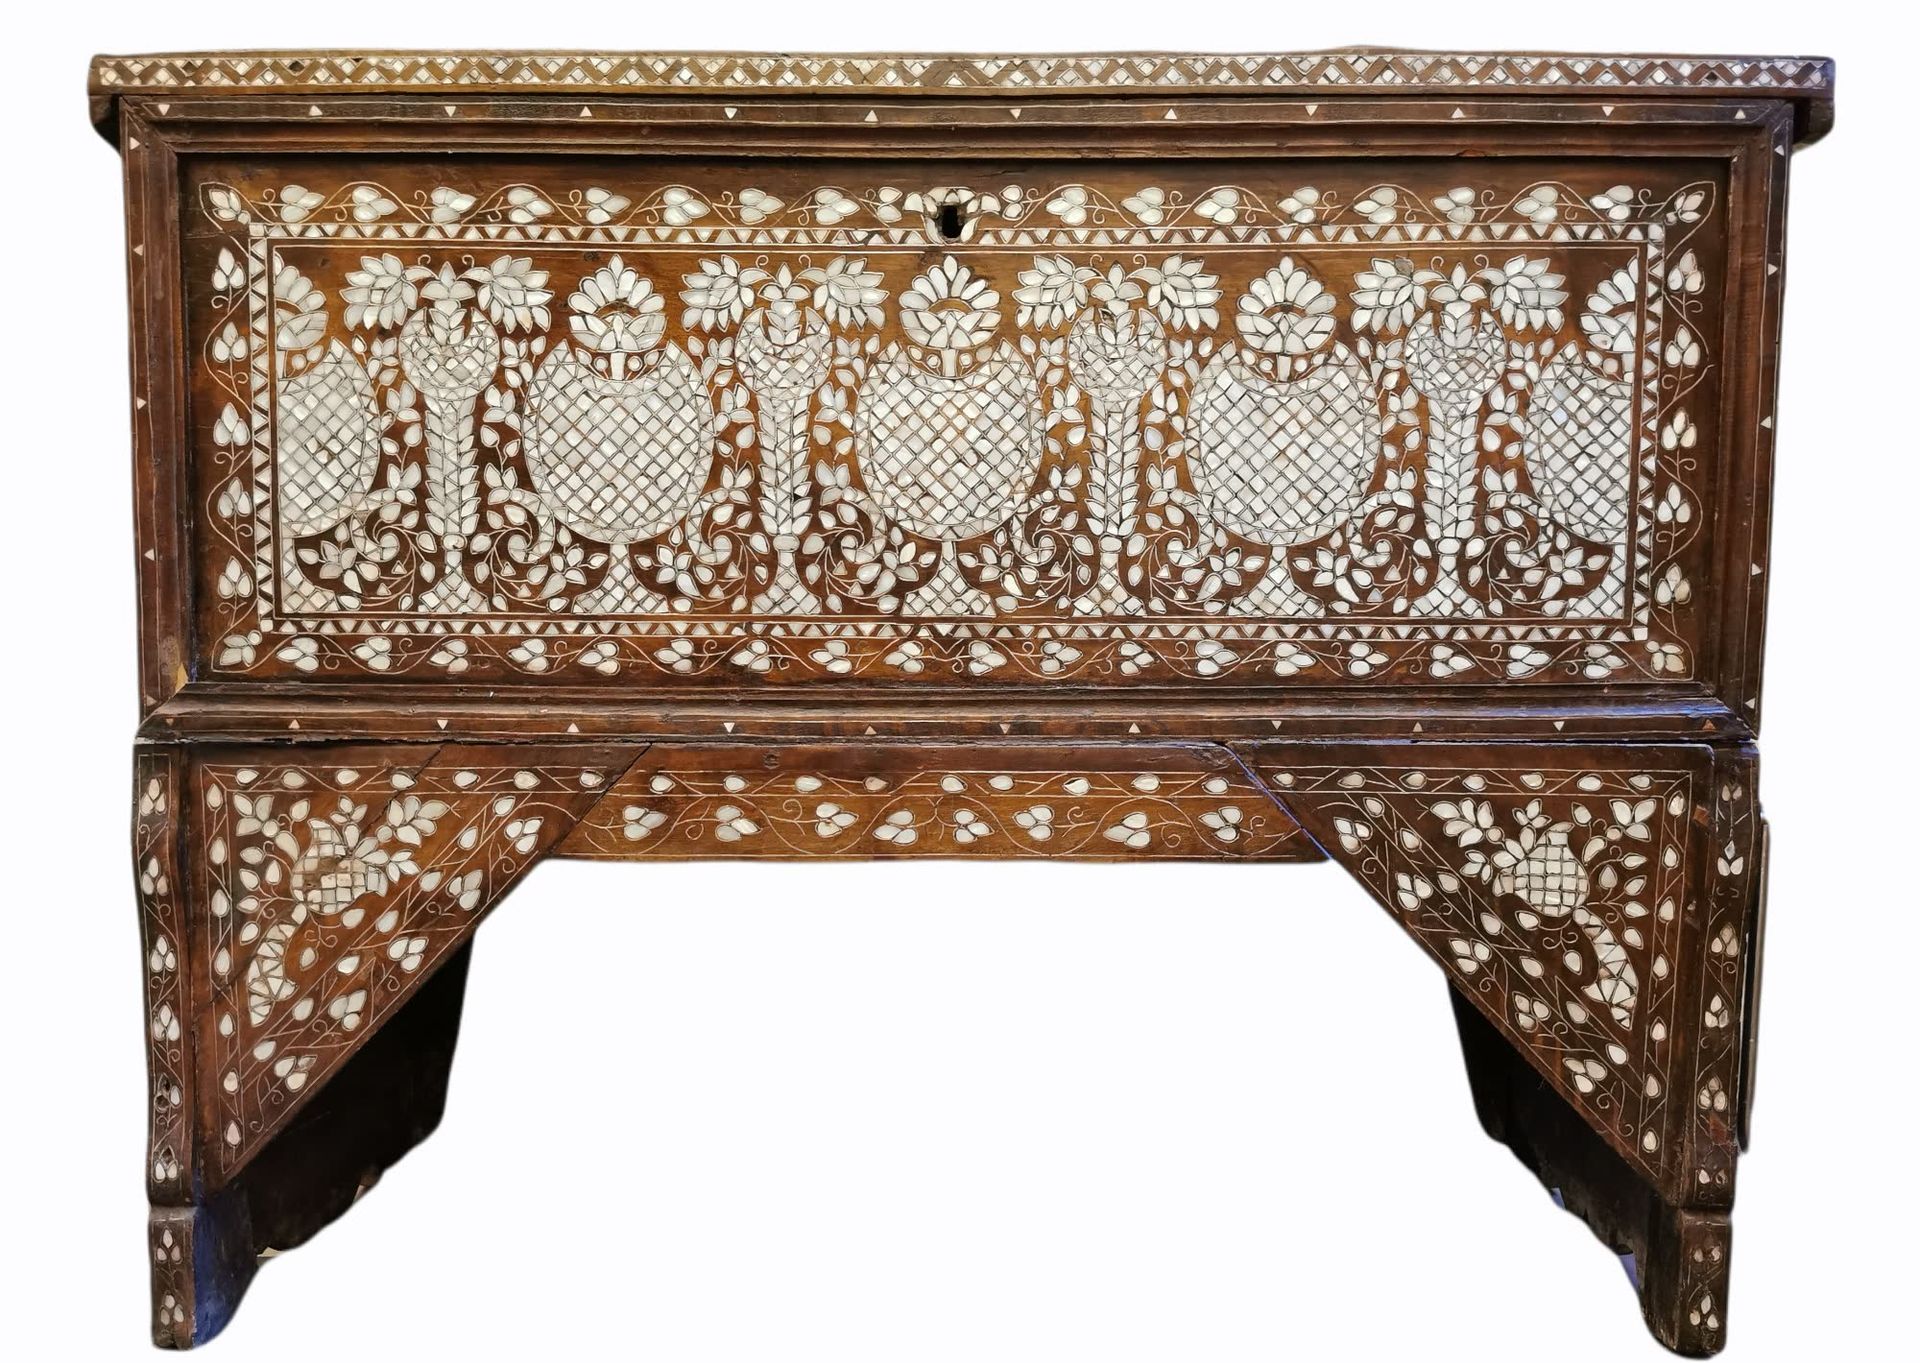 Null 大箱子
木头上镶嵌着珍珠母的花纹图案。

叙利亚作品。
103 x 135 x 52厘米。